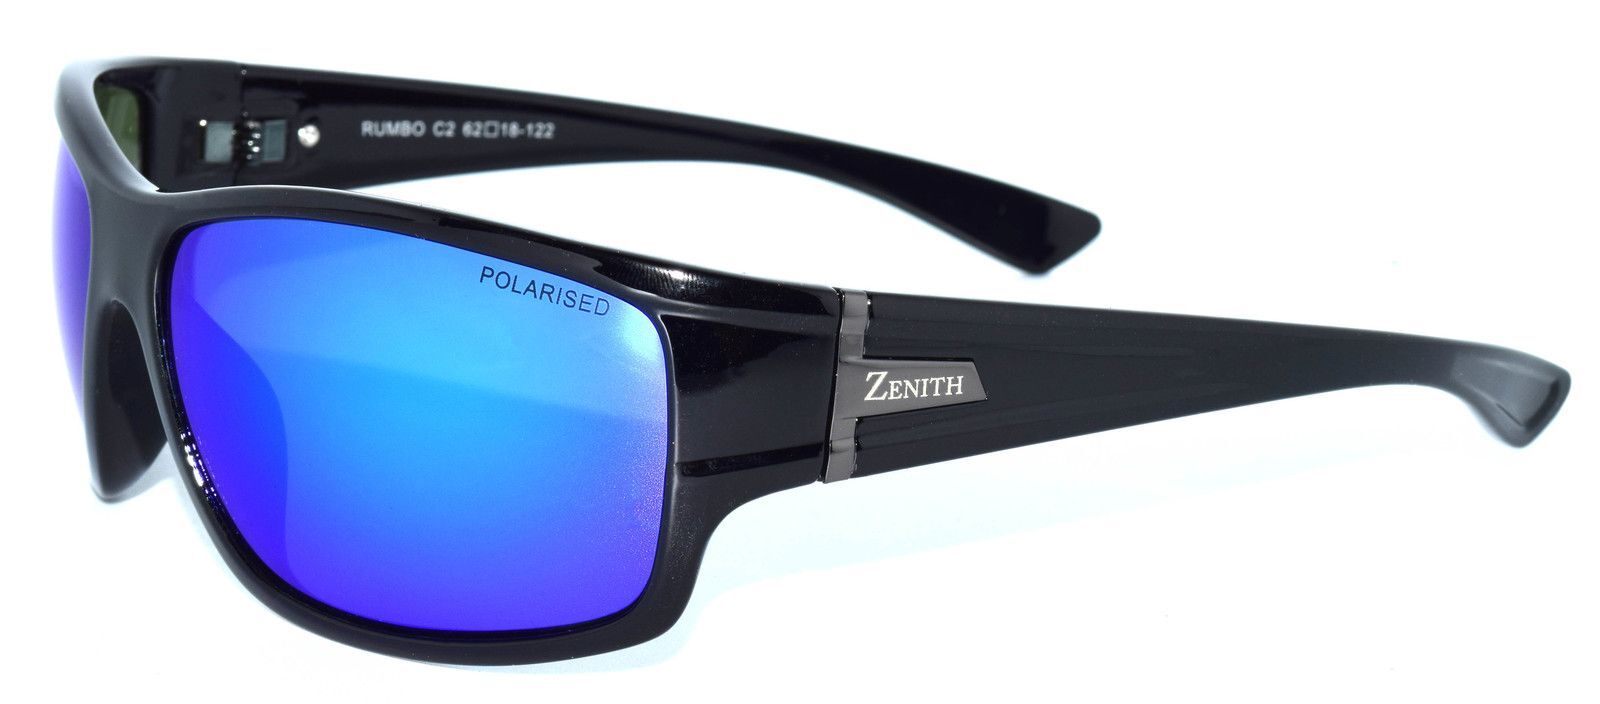 Zenith Rumbo C2 Black / Blue Revo Polarised Lenses